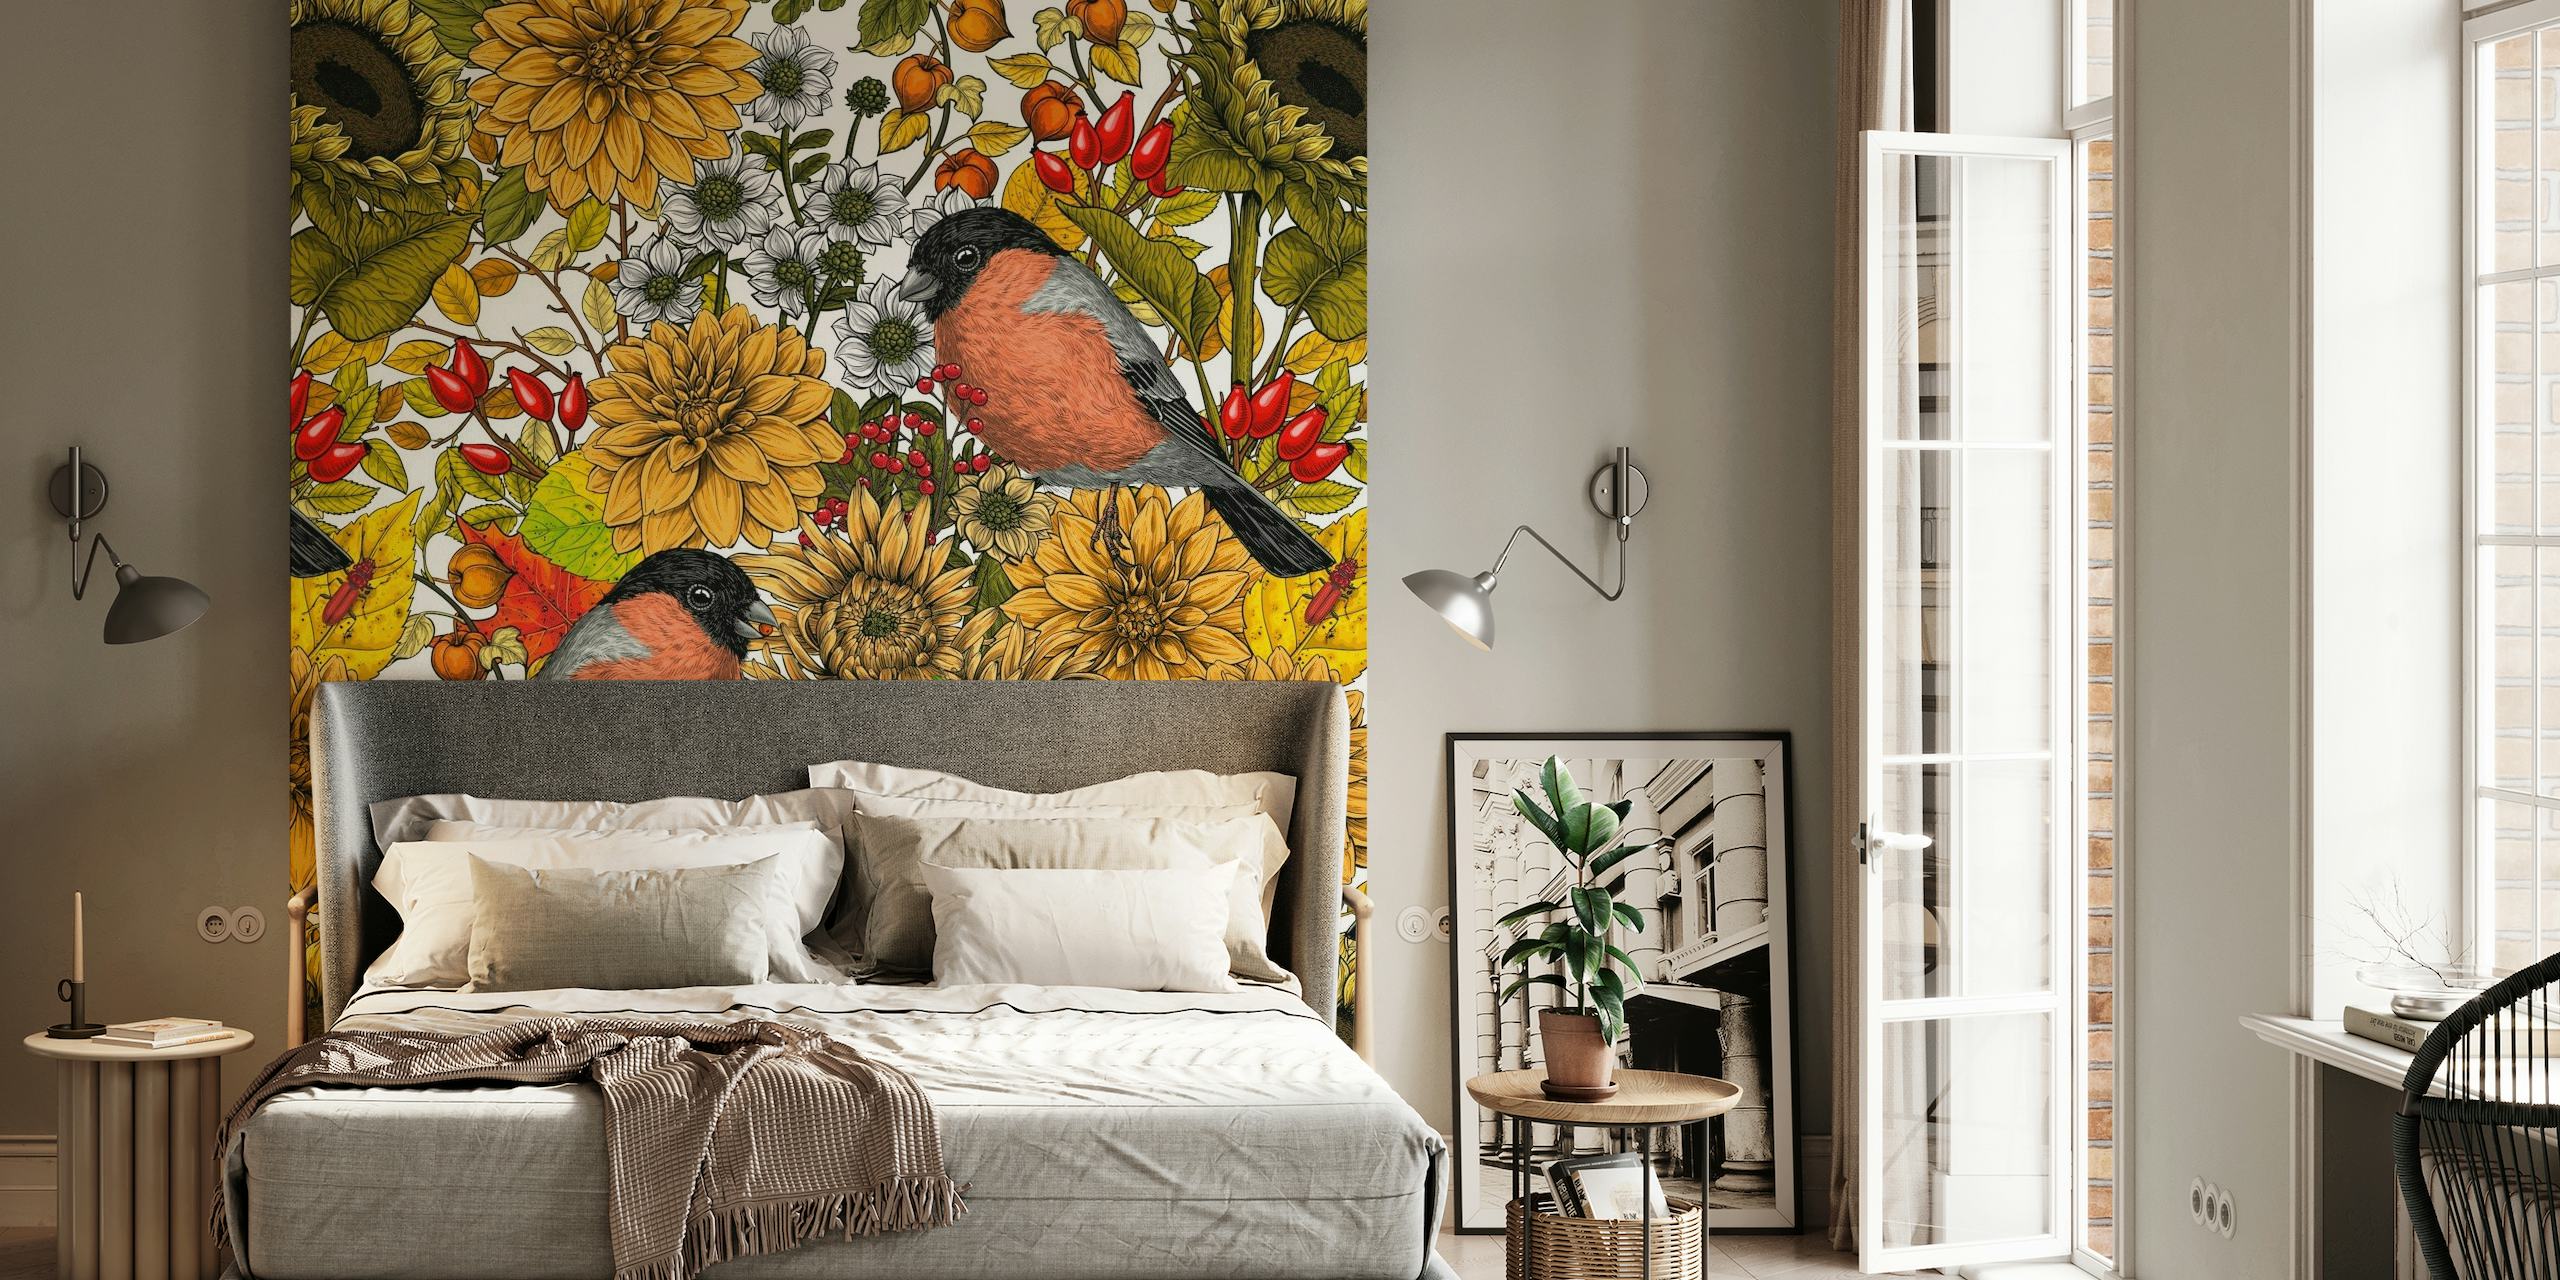 Autumn garden themed wall mural featuring sunflowers and birds